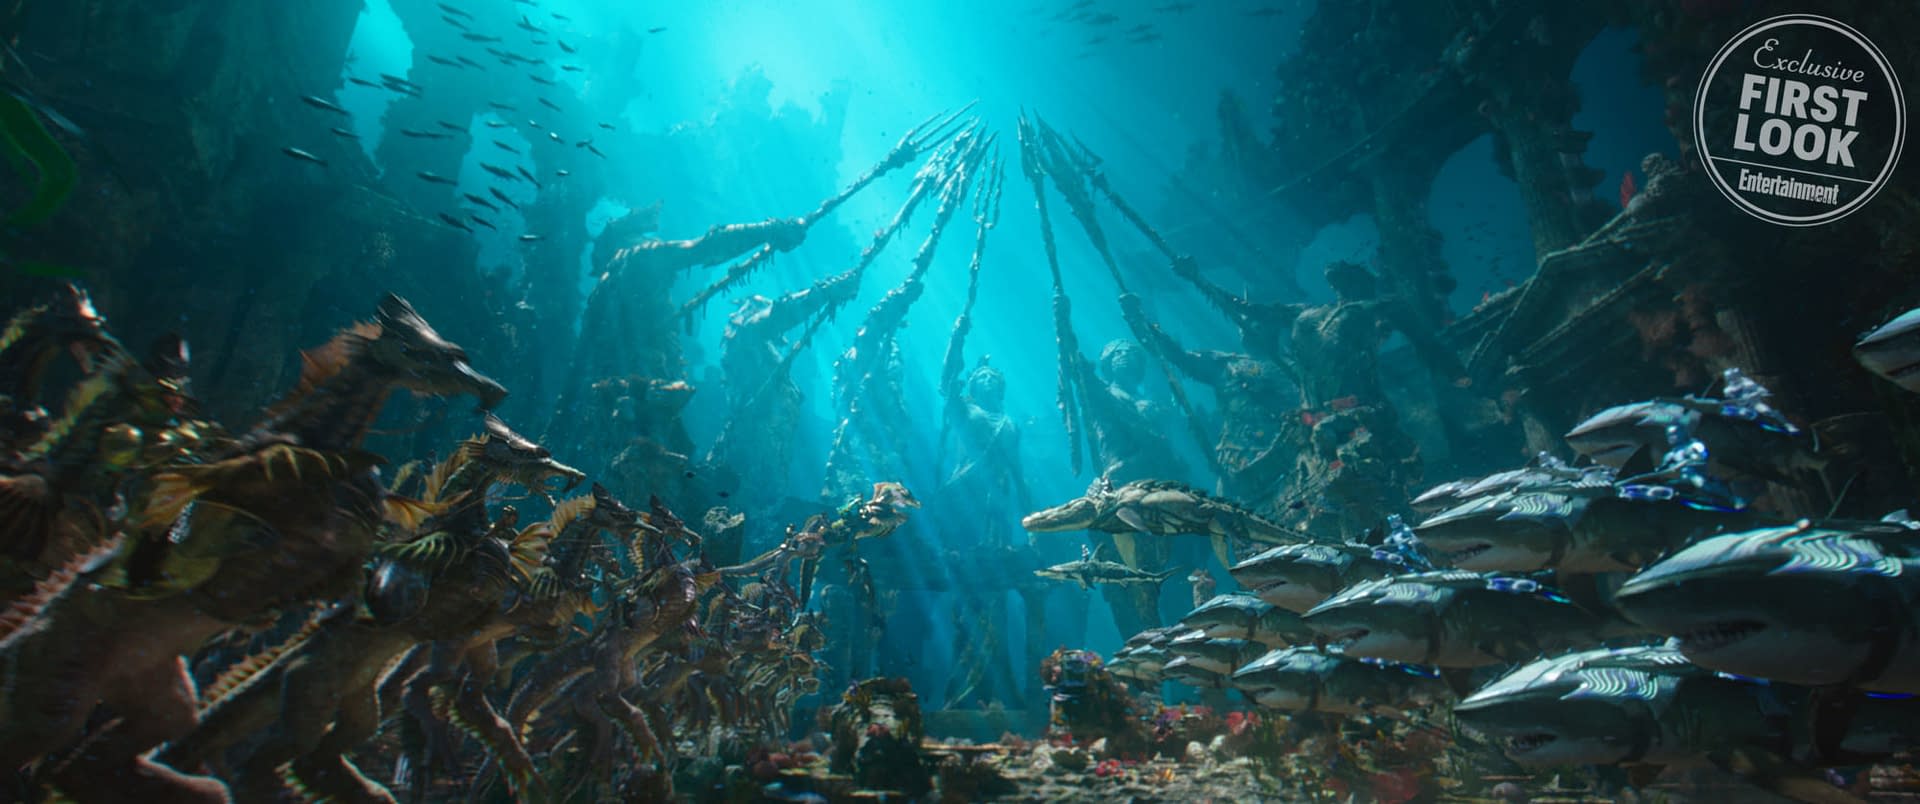 Aquaman Image and Concept Art Show Warriors of Atlantis Riding Sharks